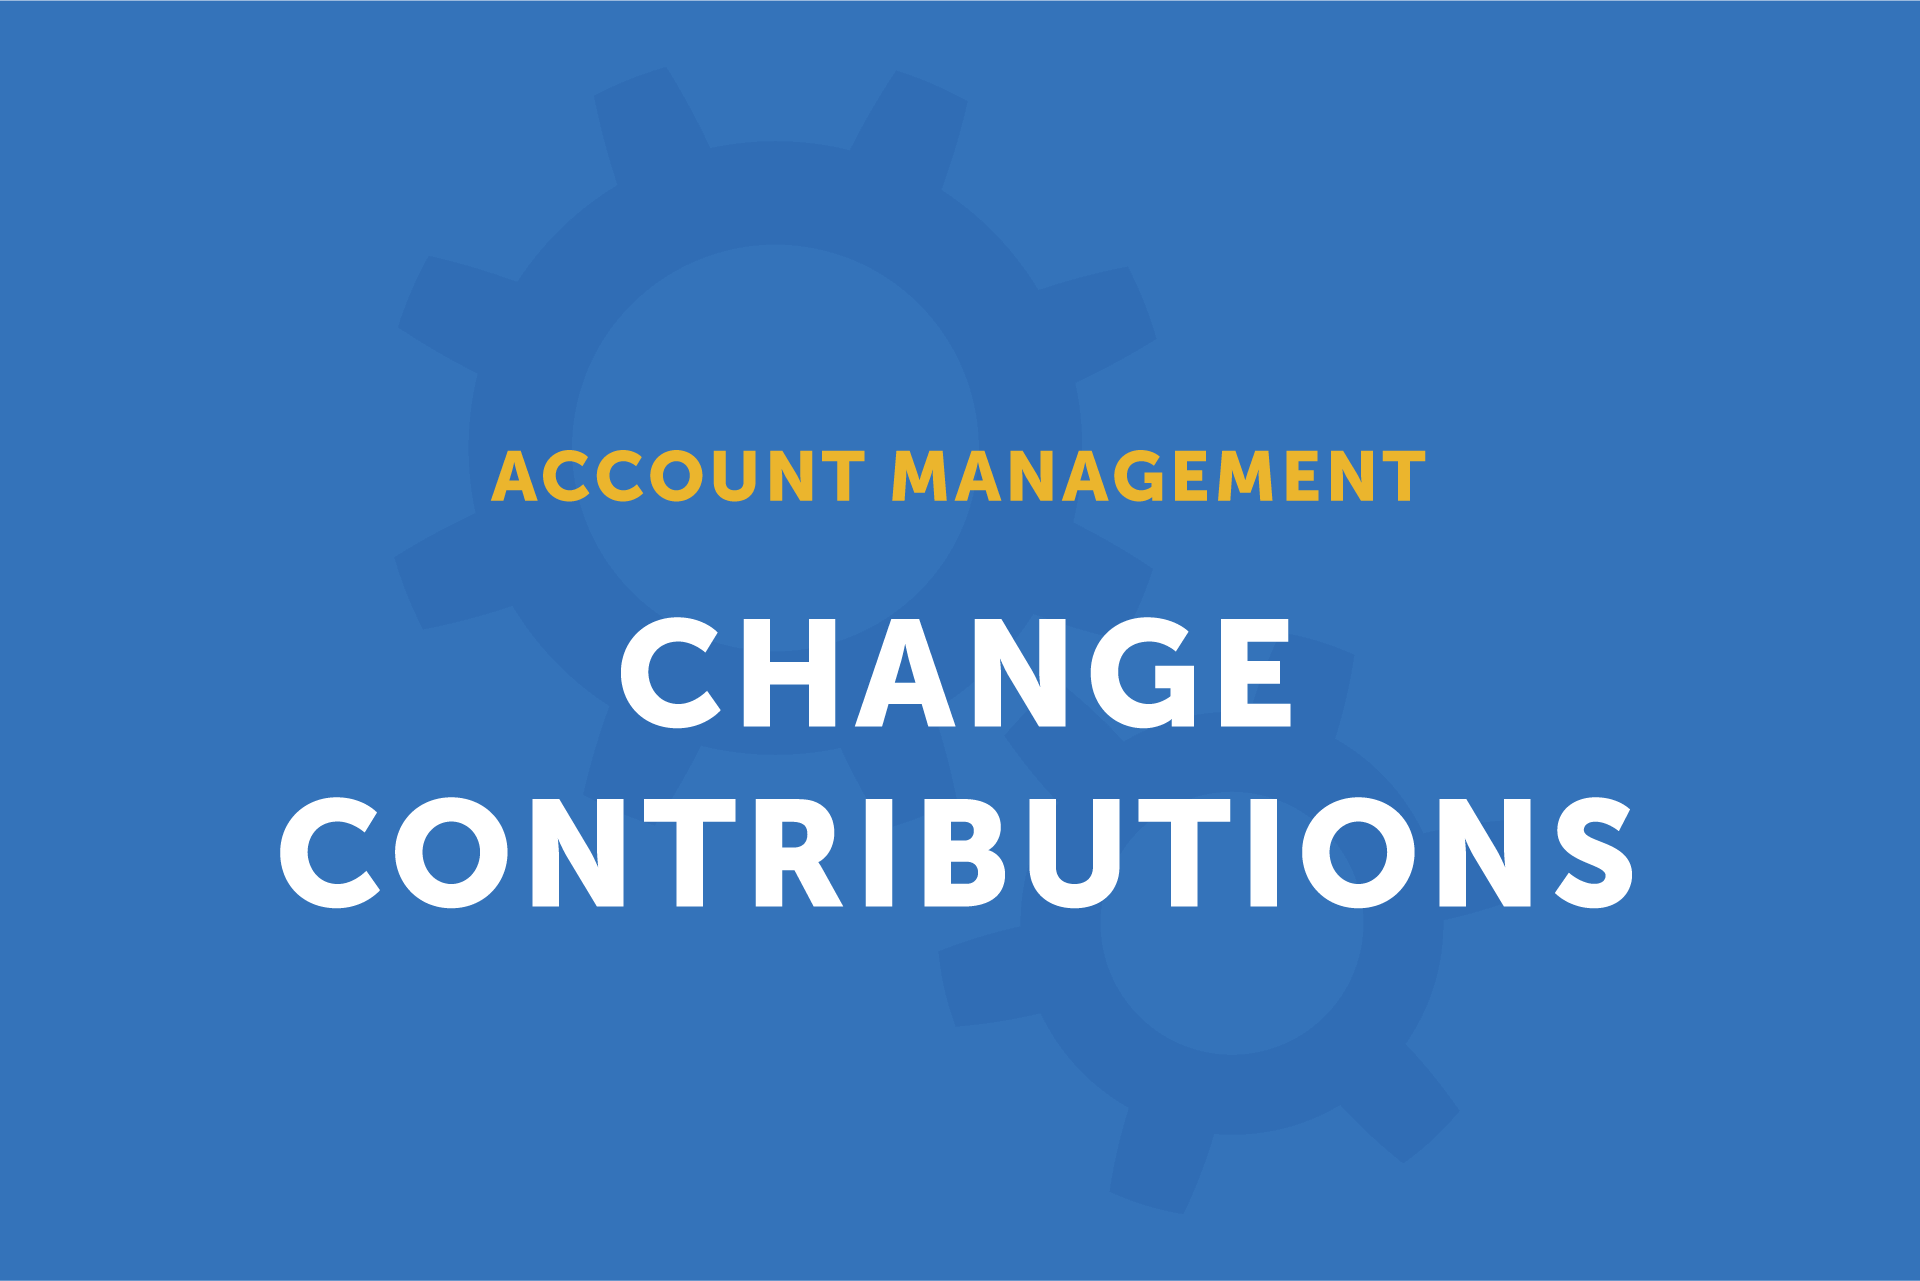 Change Contributions